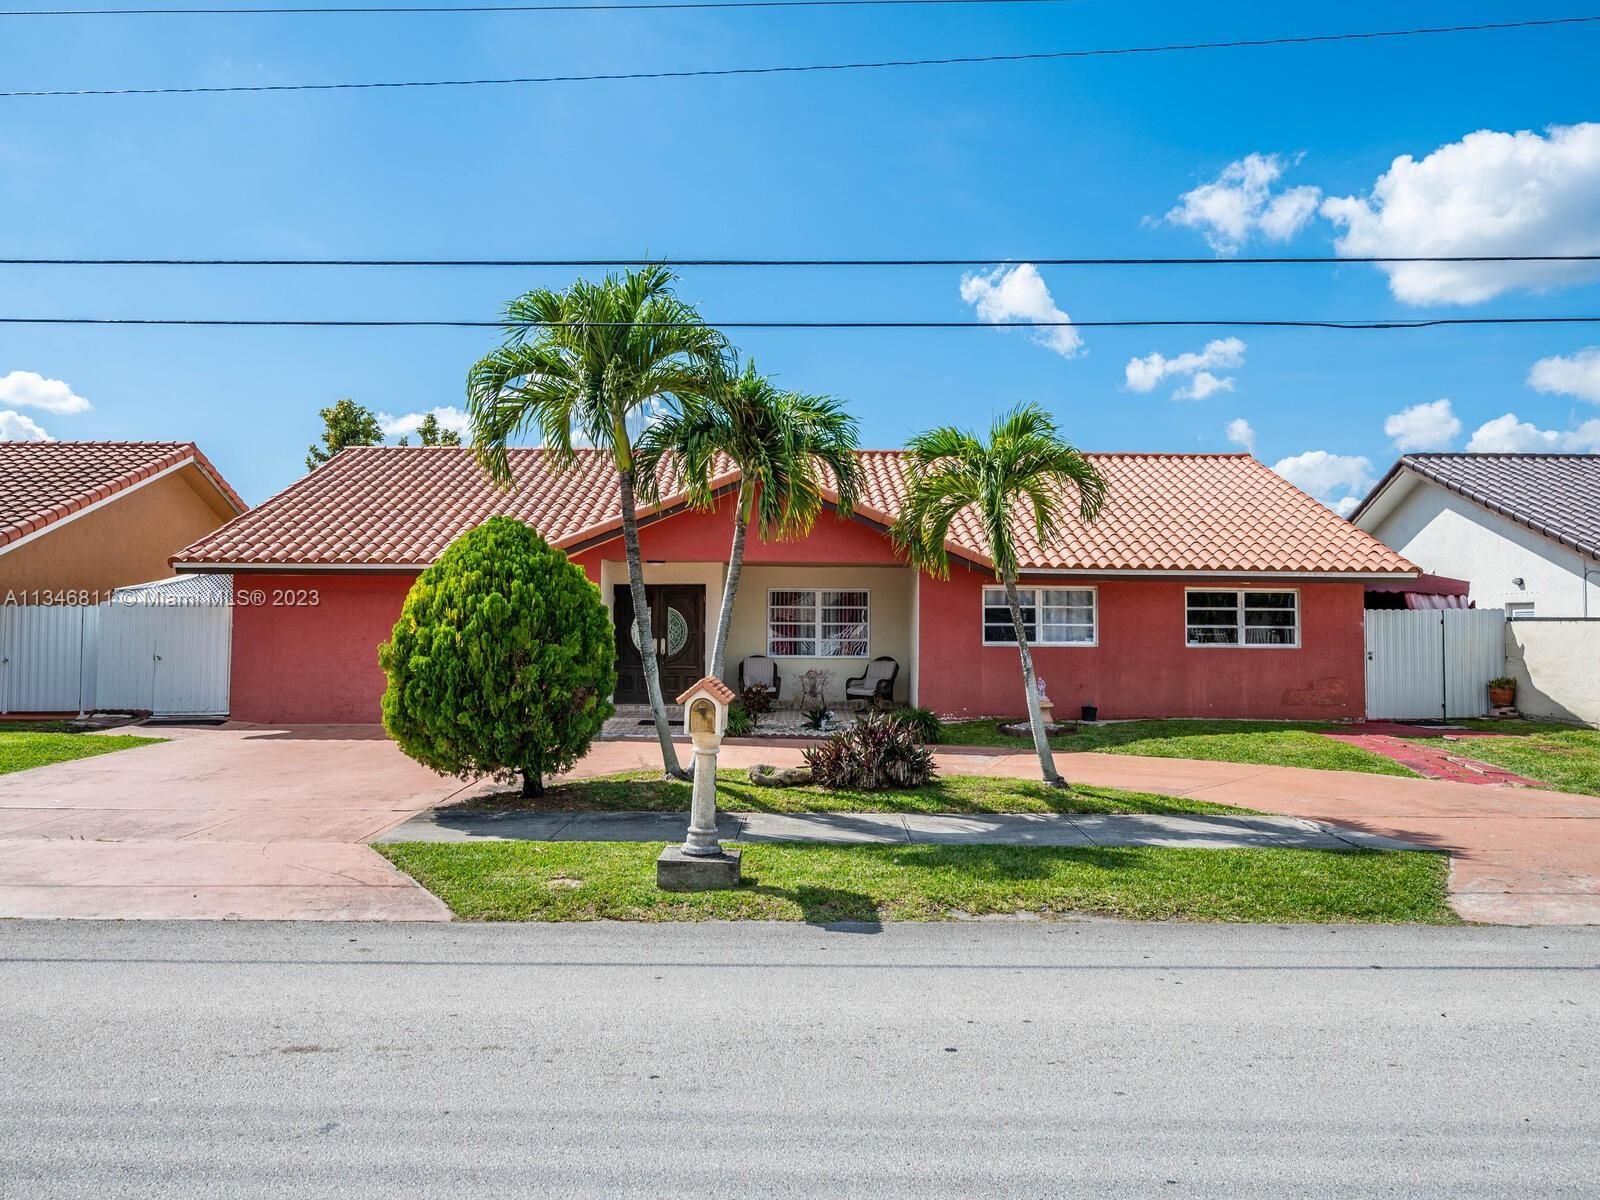 Real estate property located at 2080 139 Ave, Miami-Dade County, Miami, FL